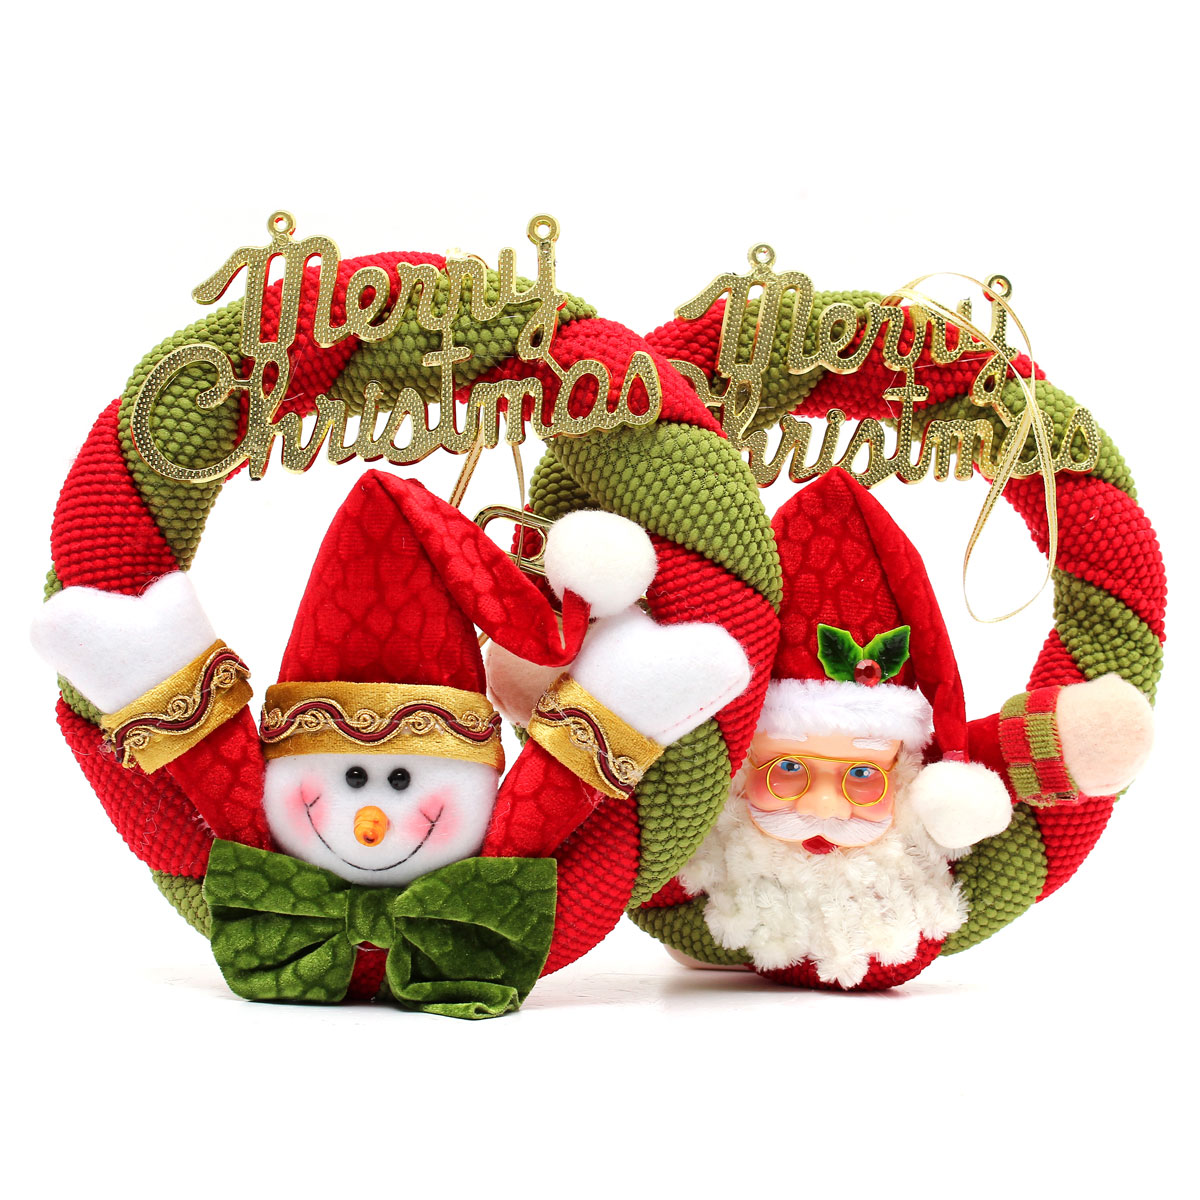 Christmas-Santa-Claus-Ornaments-Festival-Party-Xmas-Tree-Hanging-Decoration-1002250-3